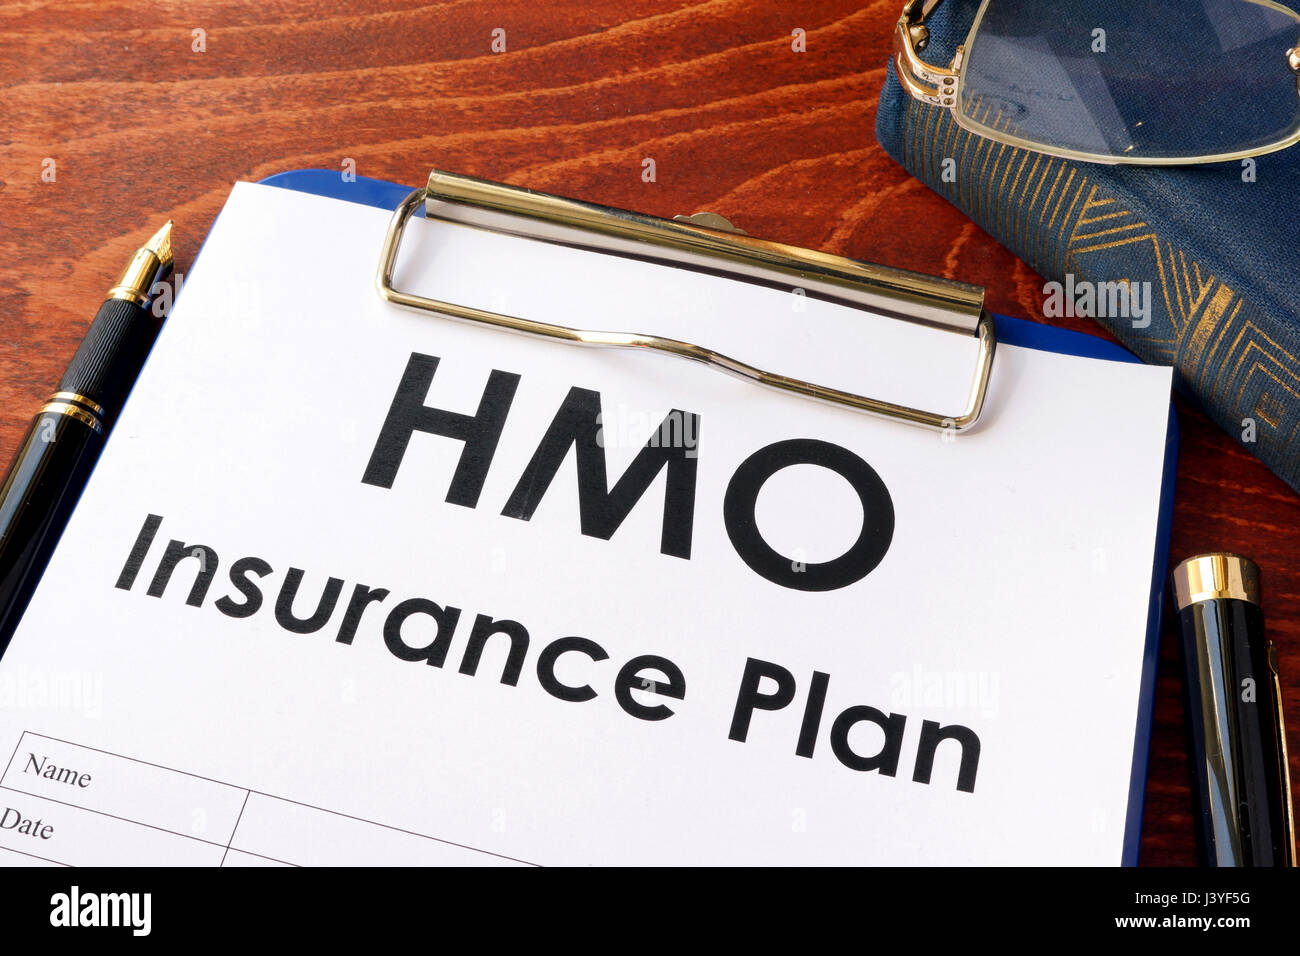 HMO Insurance Plan on a table. (Health Maintenance Organization) Stock Photo